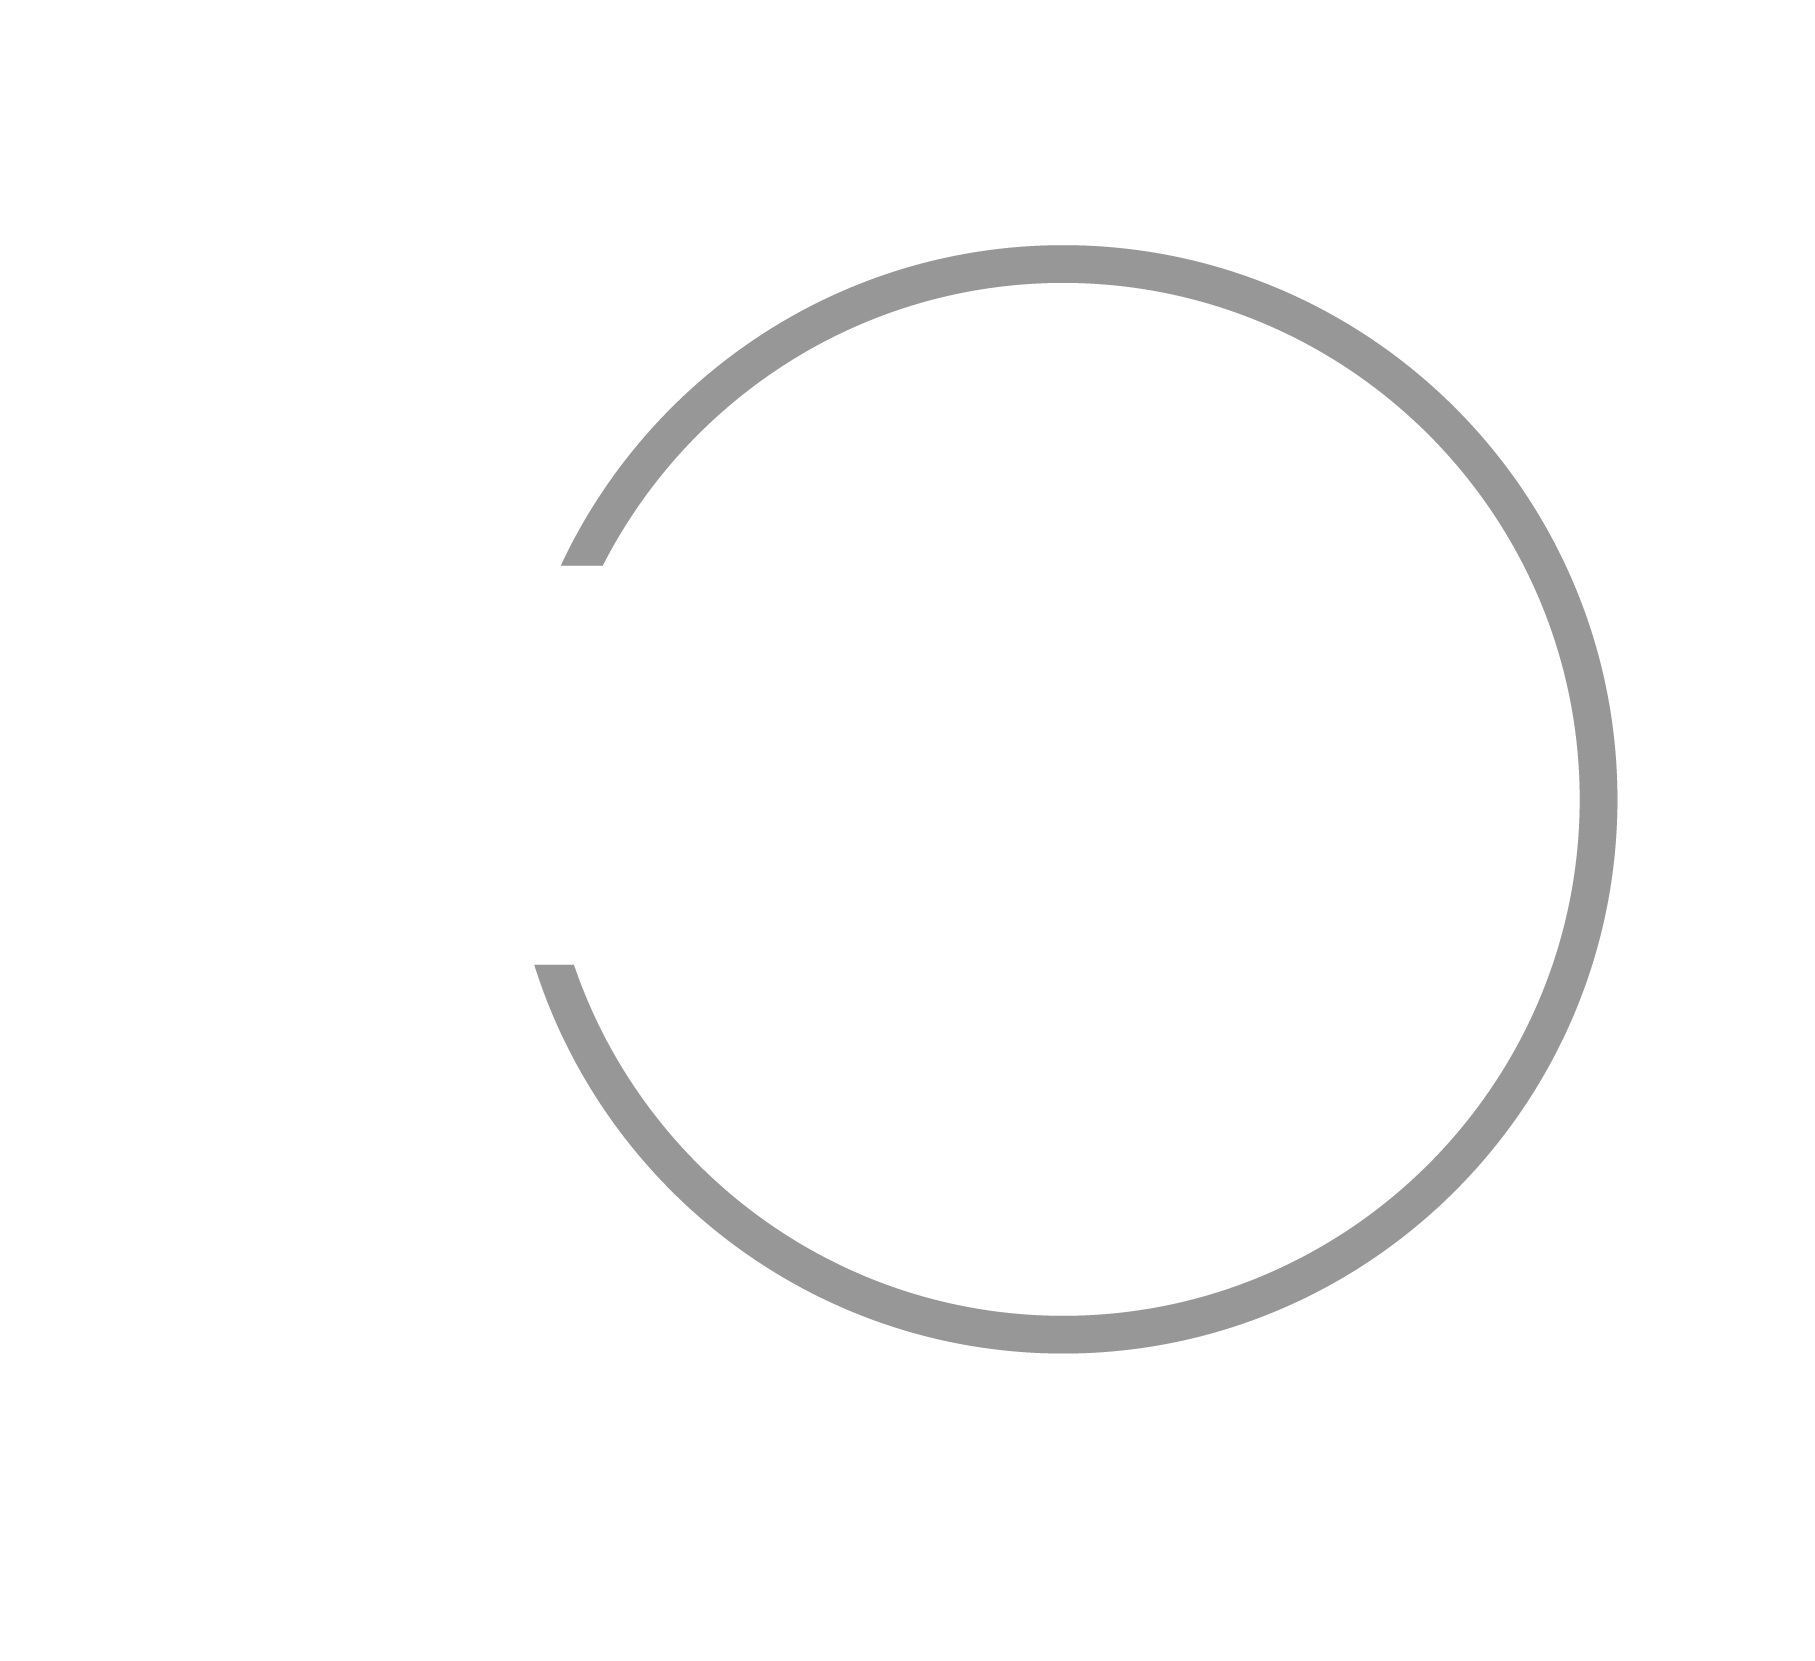 Elevate Fitness